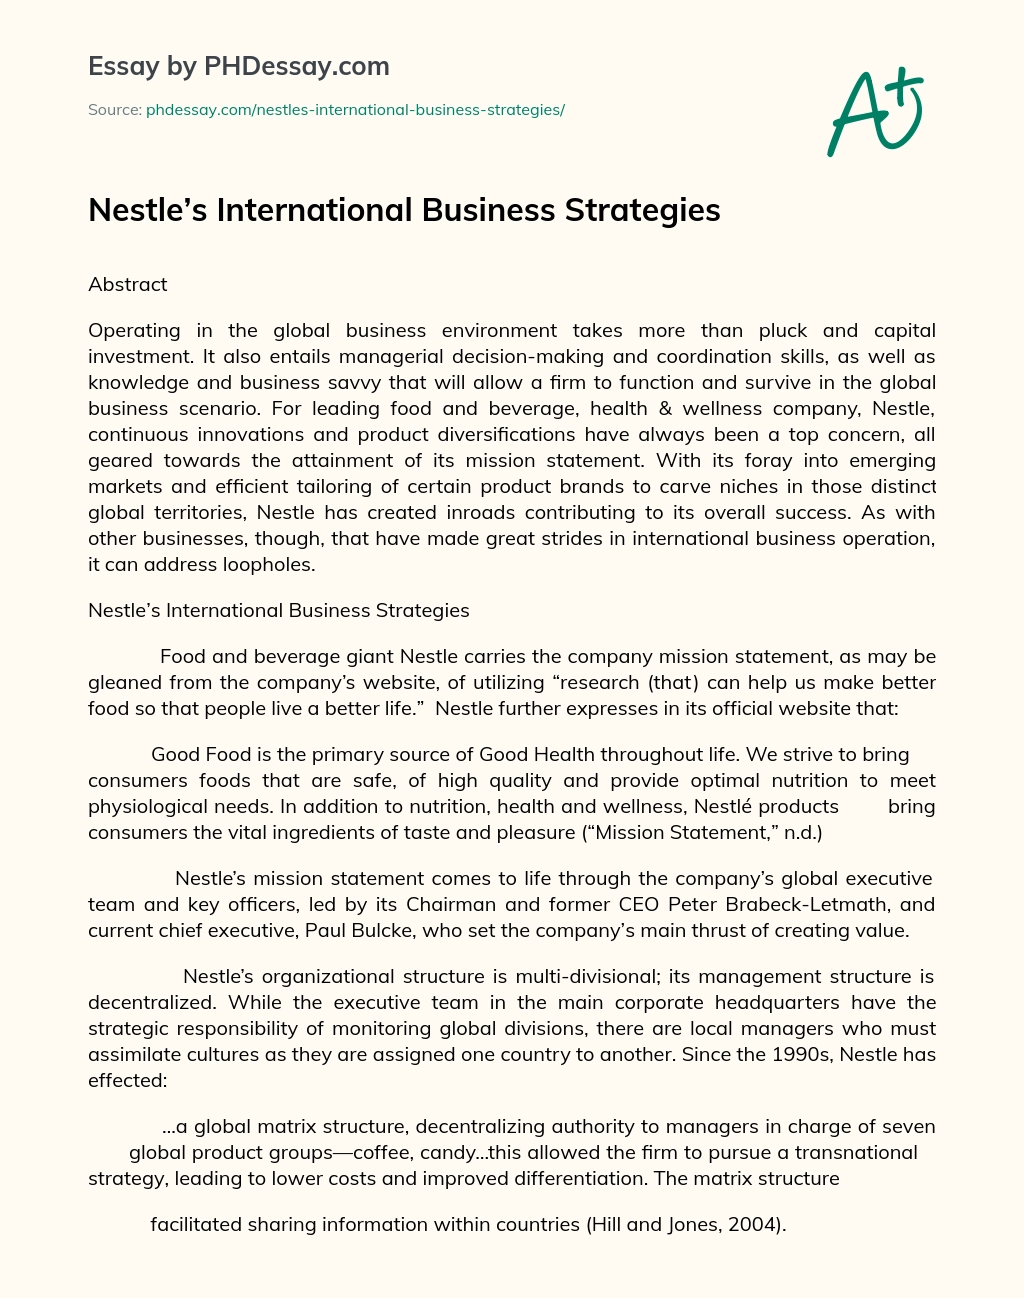 Nestle’s International Business Strategies essay